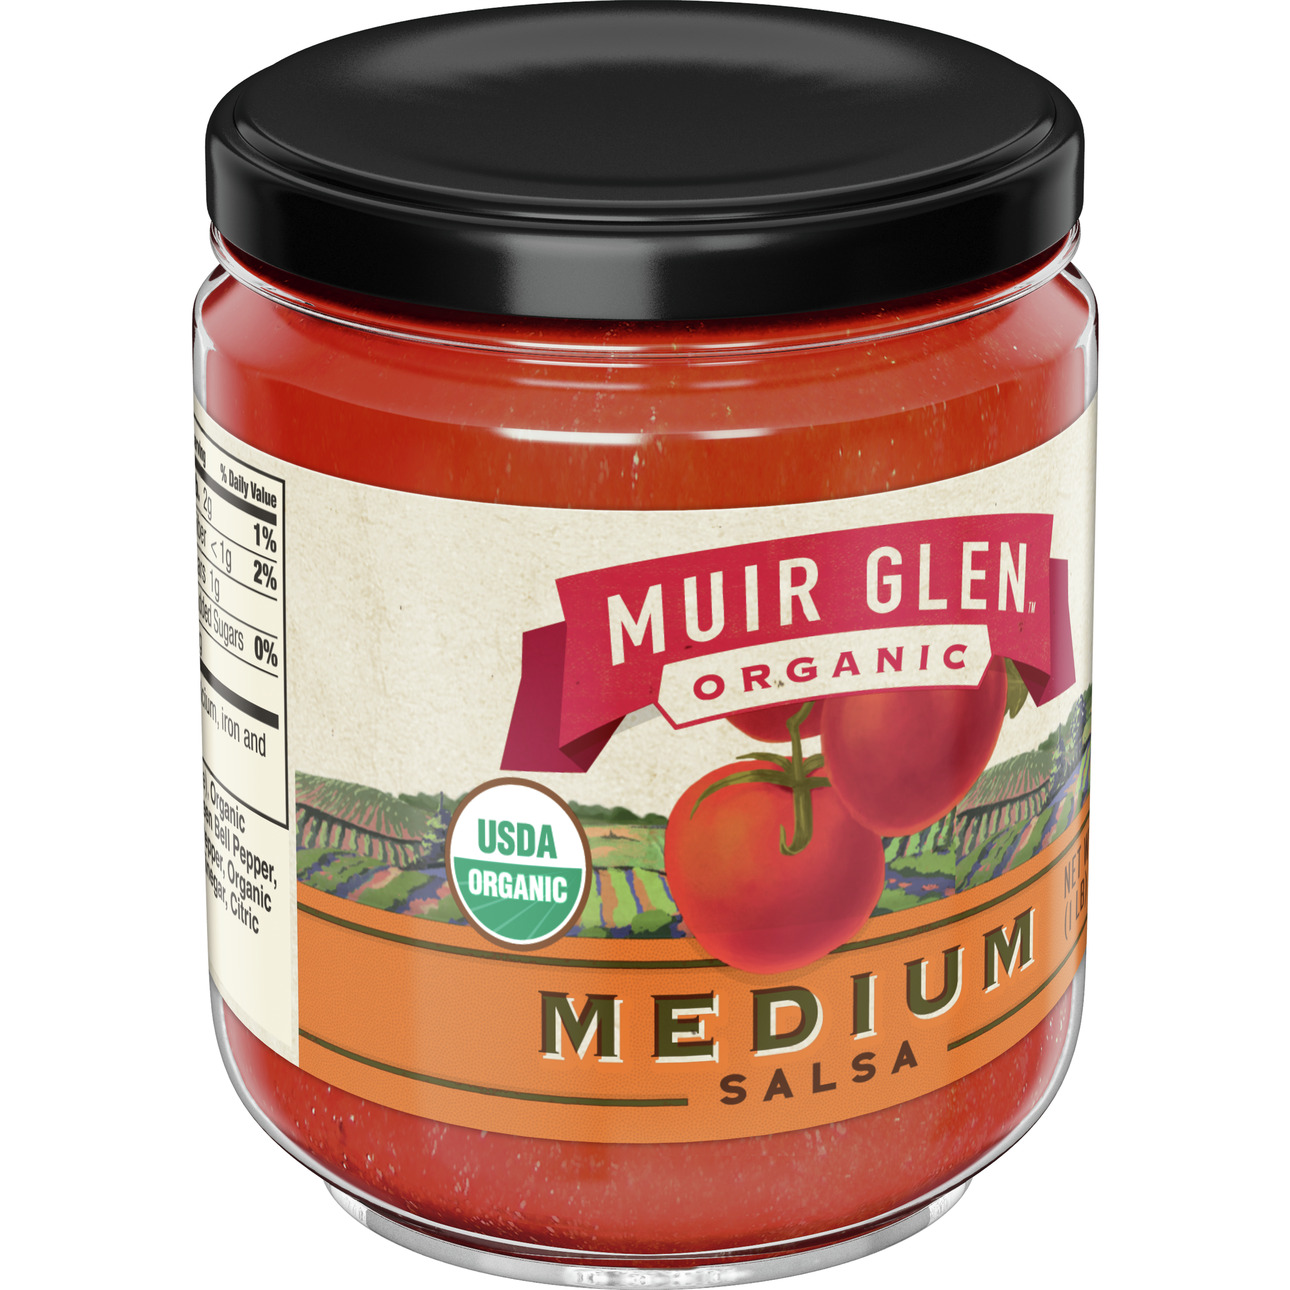 Muir Glen USDA Certified Organic Medium Salsa, 16 oz - image 3 of 6